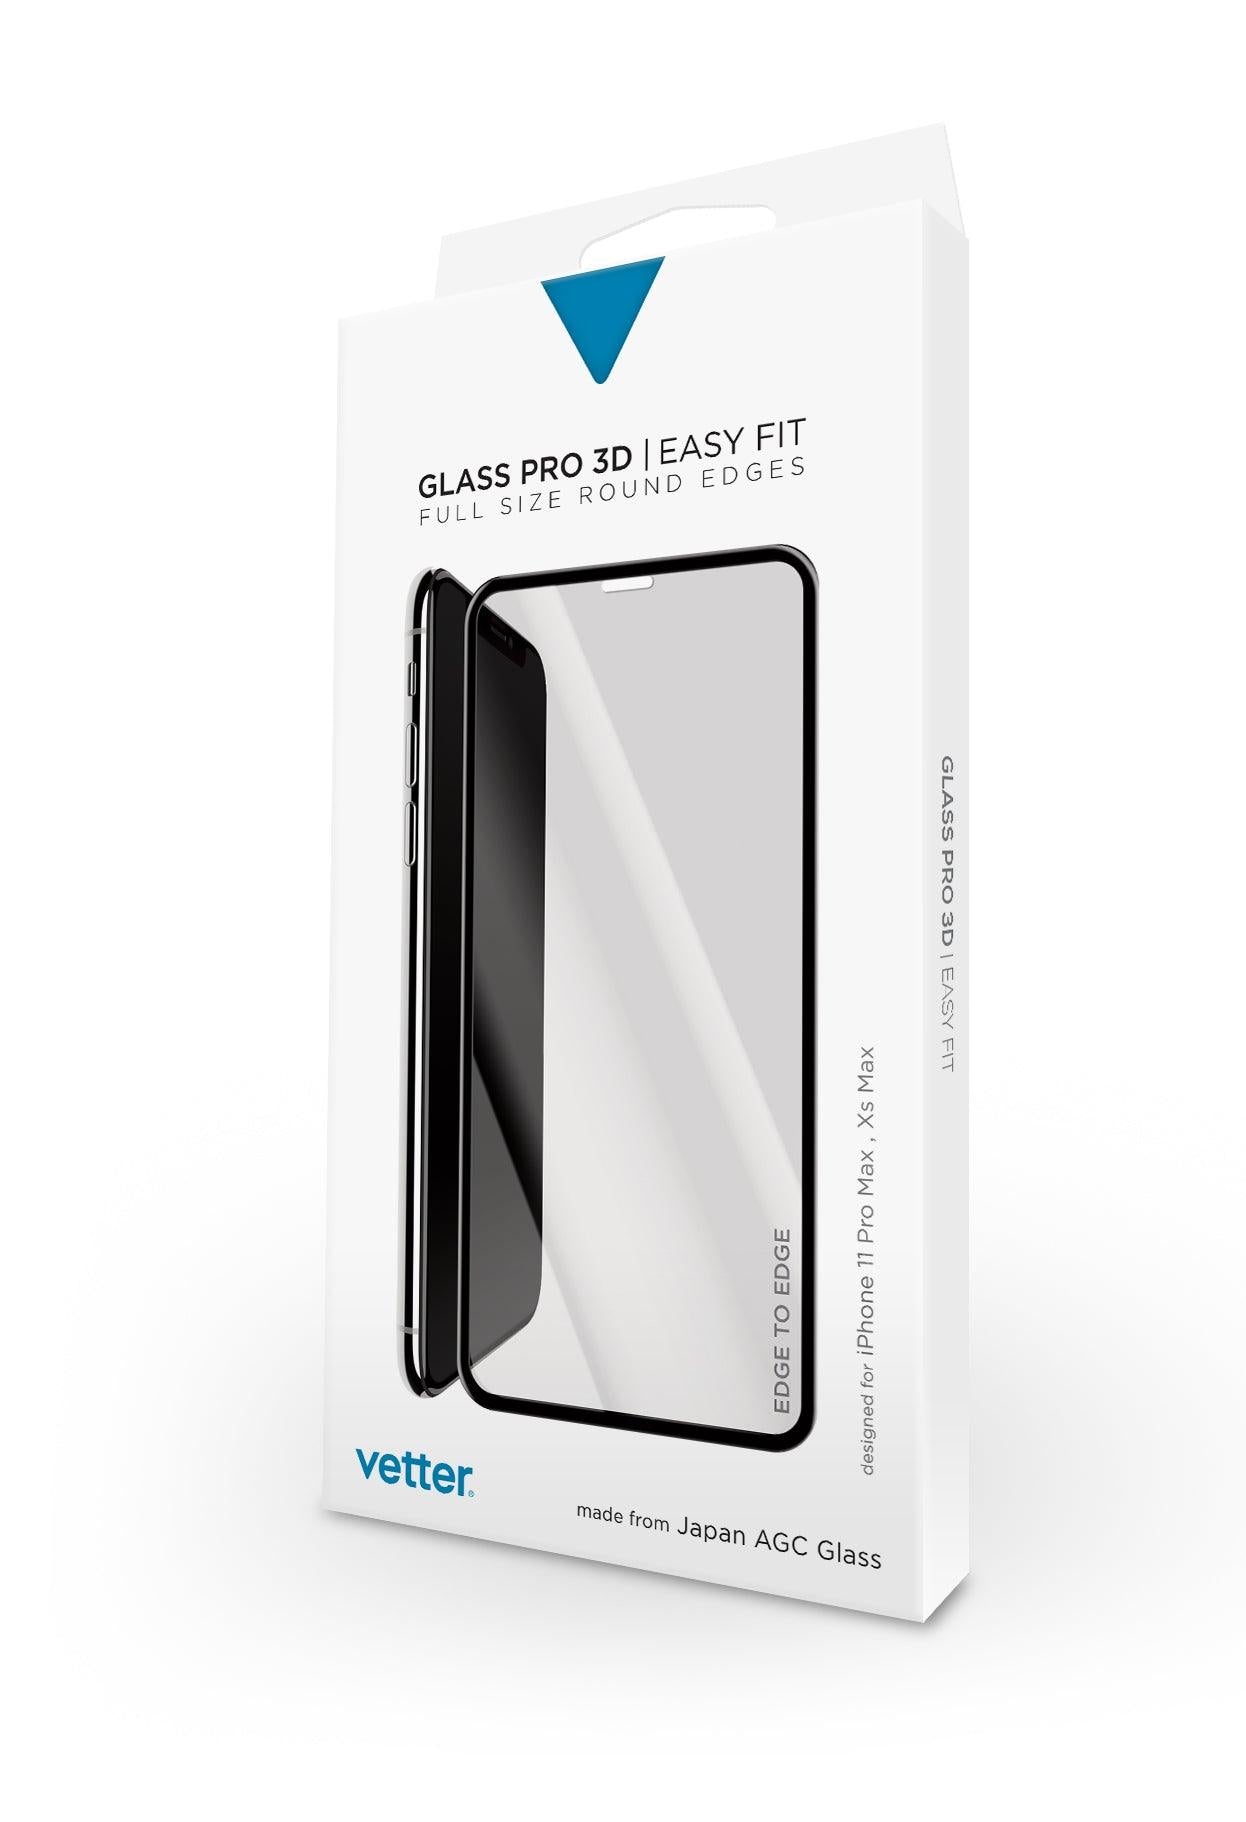 Folie Protectie Ecran iPhone 11 Pro Max, 3D Tempered Glass Easy Fit, Negru - vetter.ro